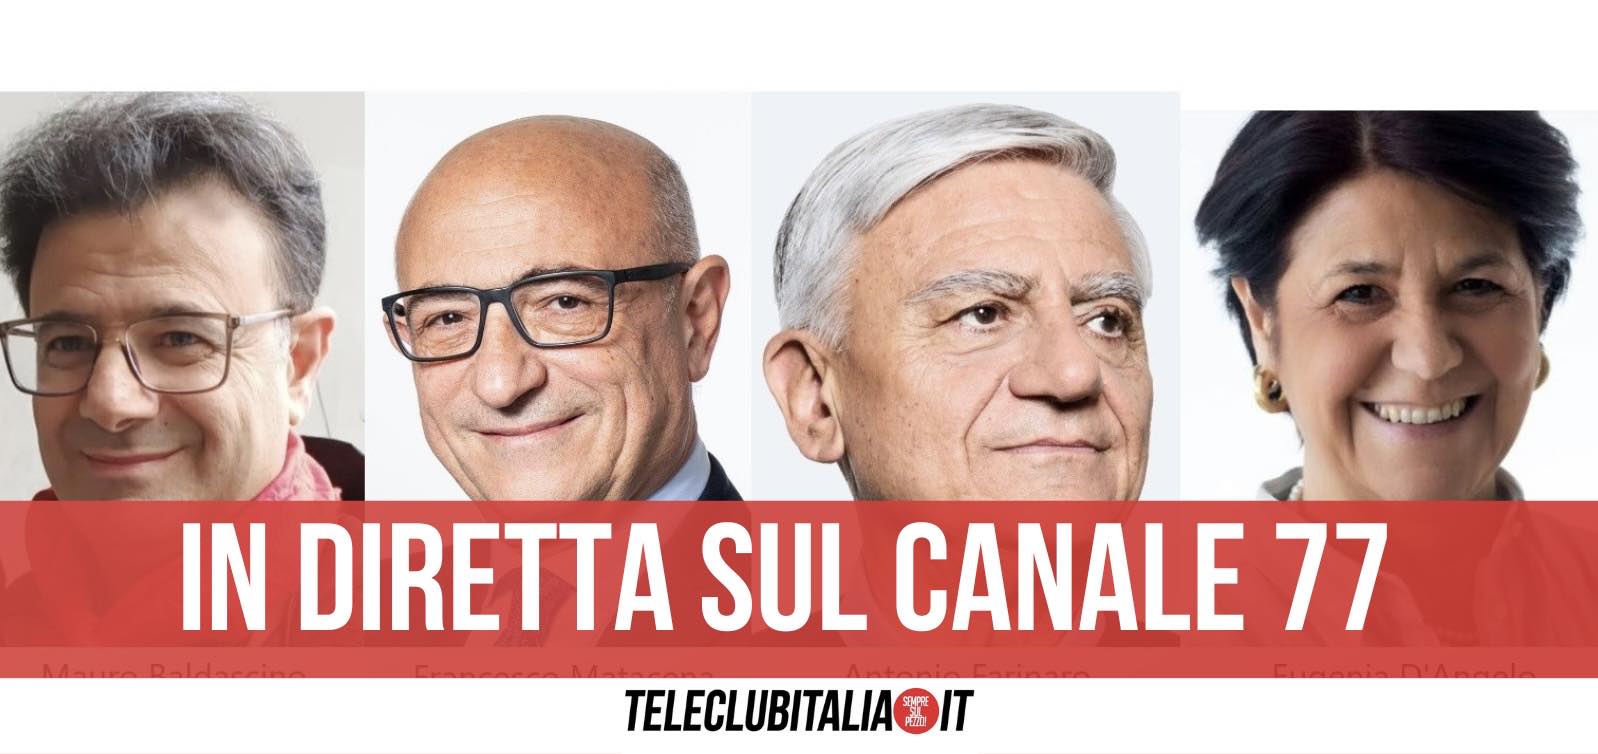 Confronto Aversa Canale 77 Candidati Sindaco